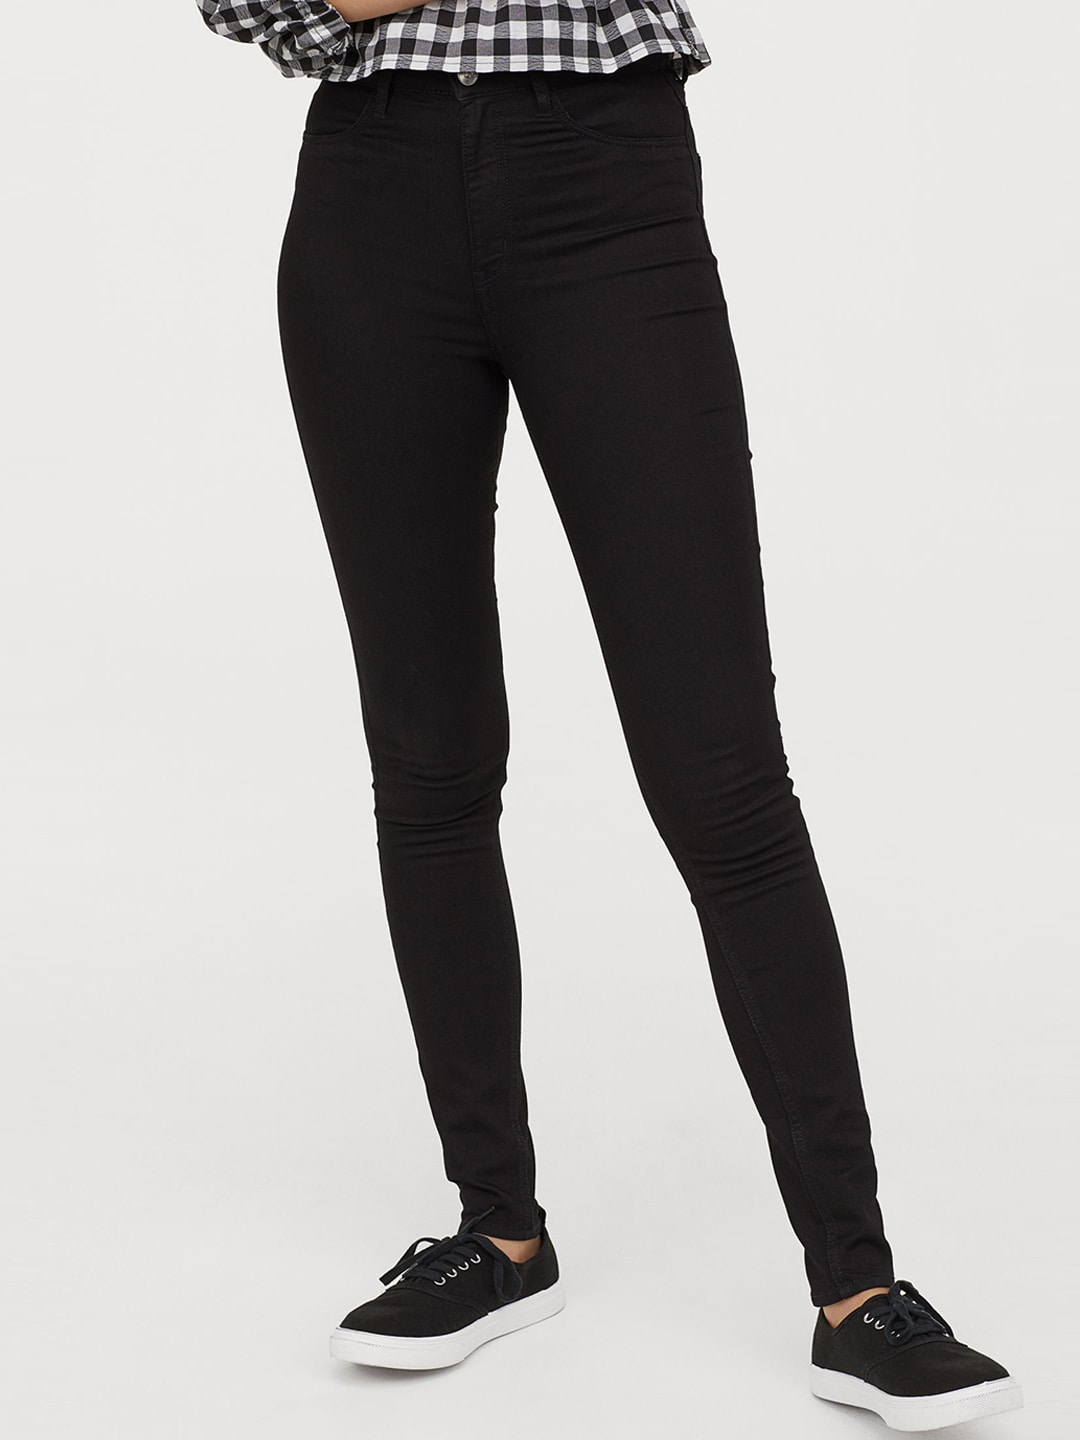 H&M Women Black Super Skinny High Jeans